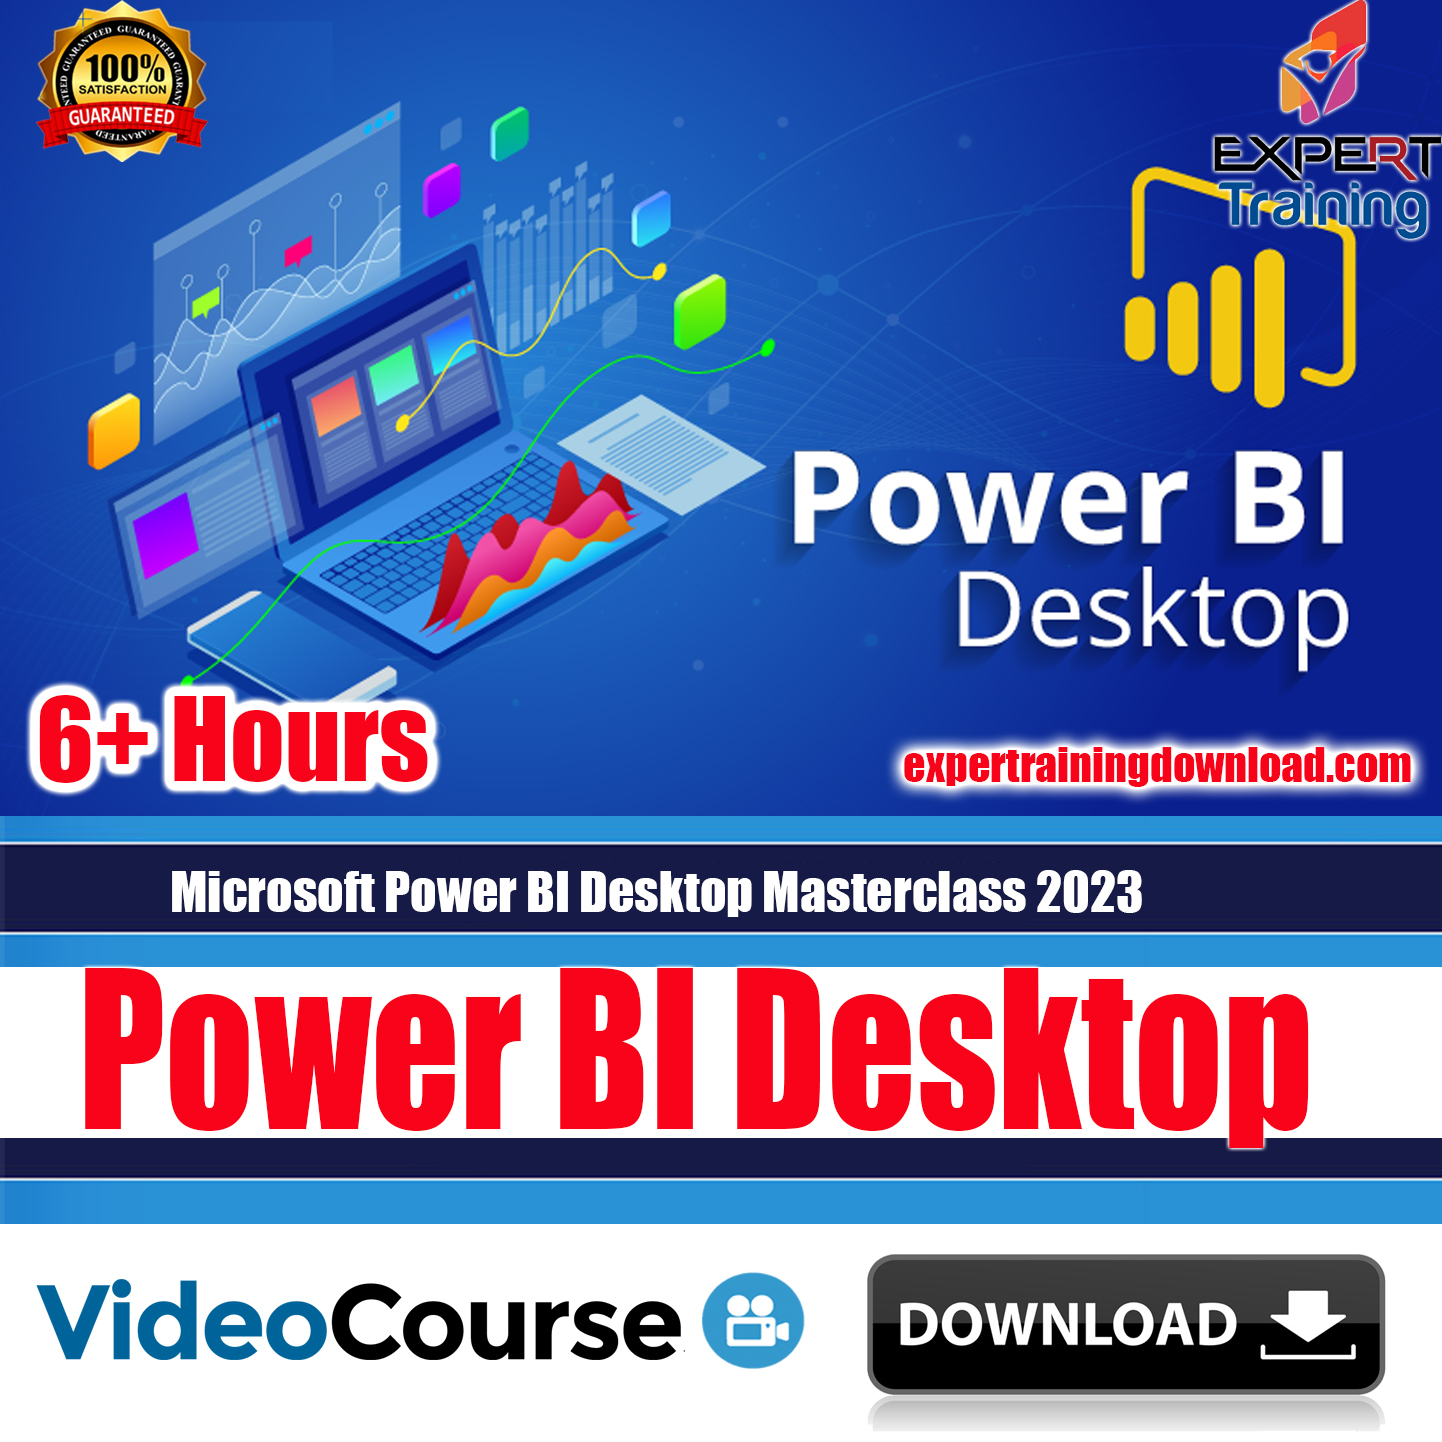 Microsoft Power BI Desktop Masterclass 2023